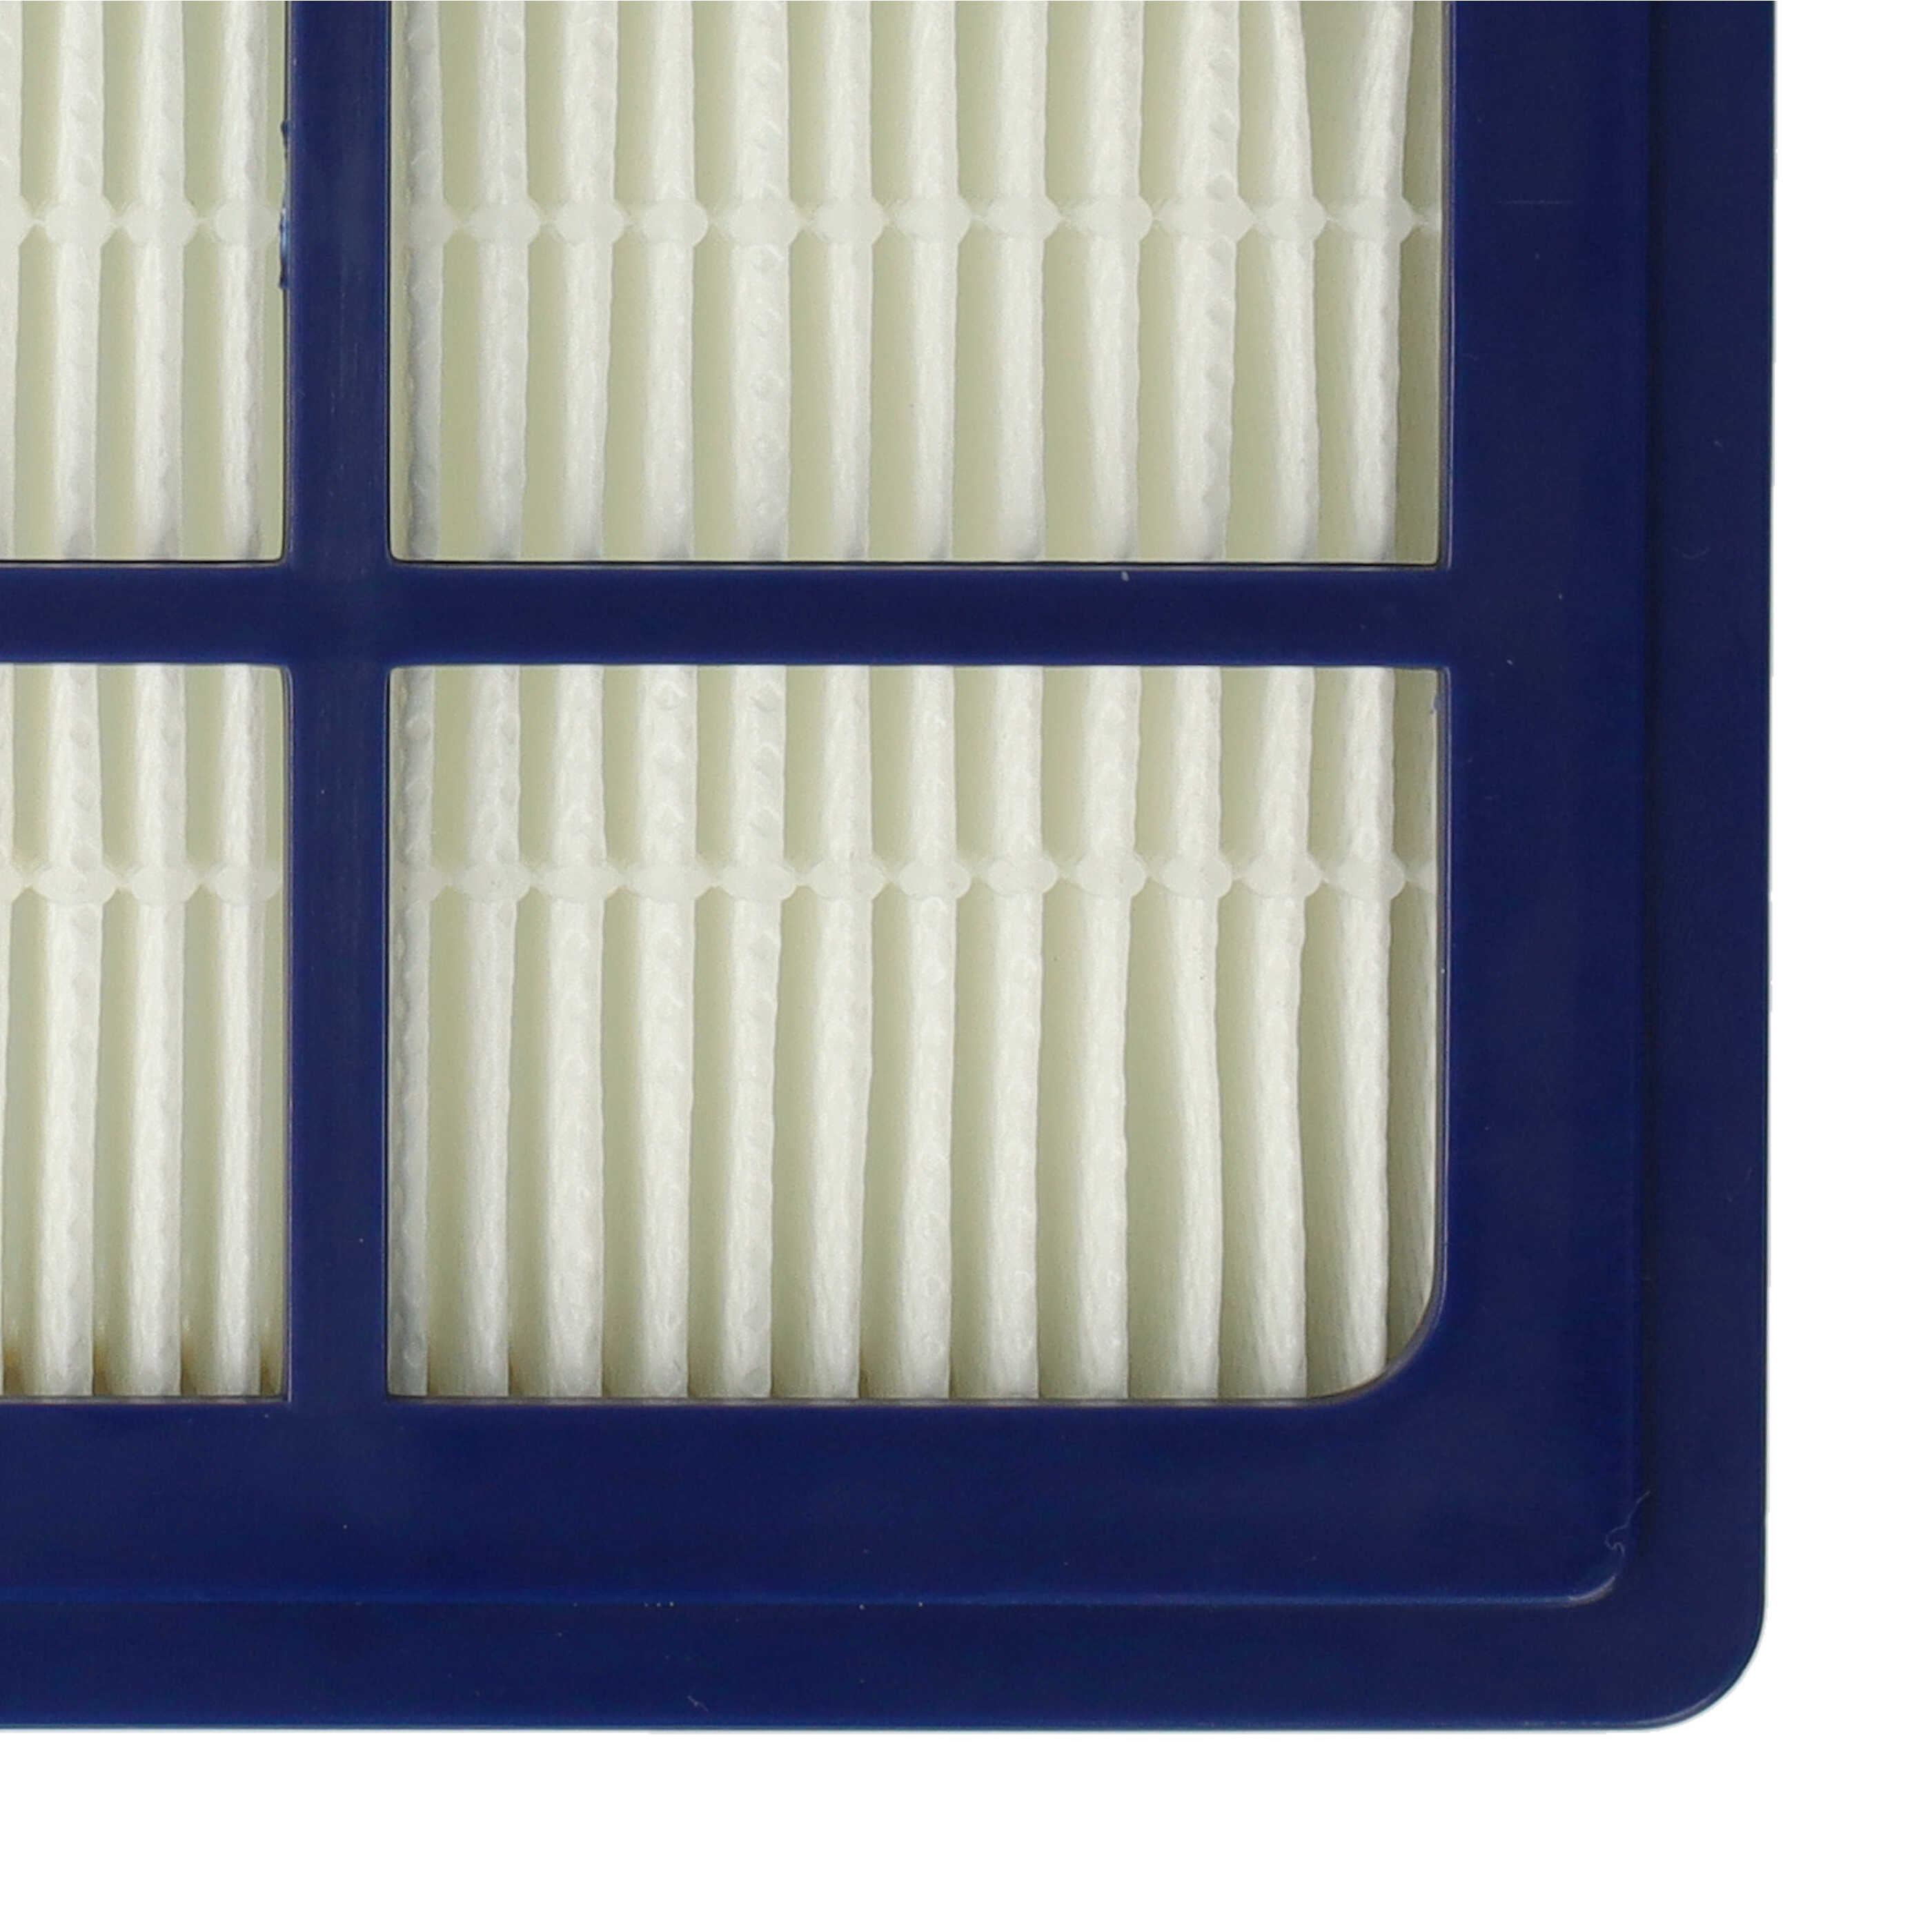 Filtro reemplaza Nilfisk 147 0432 500 para aspiradora - filtro Hepa blanco / azul